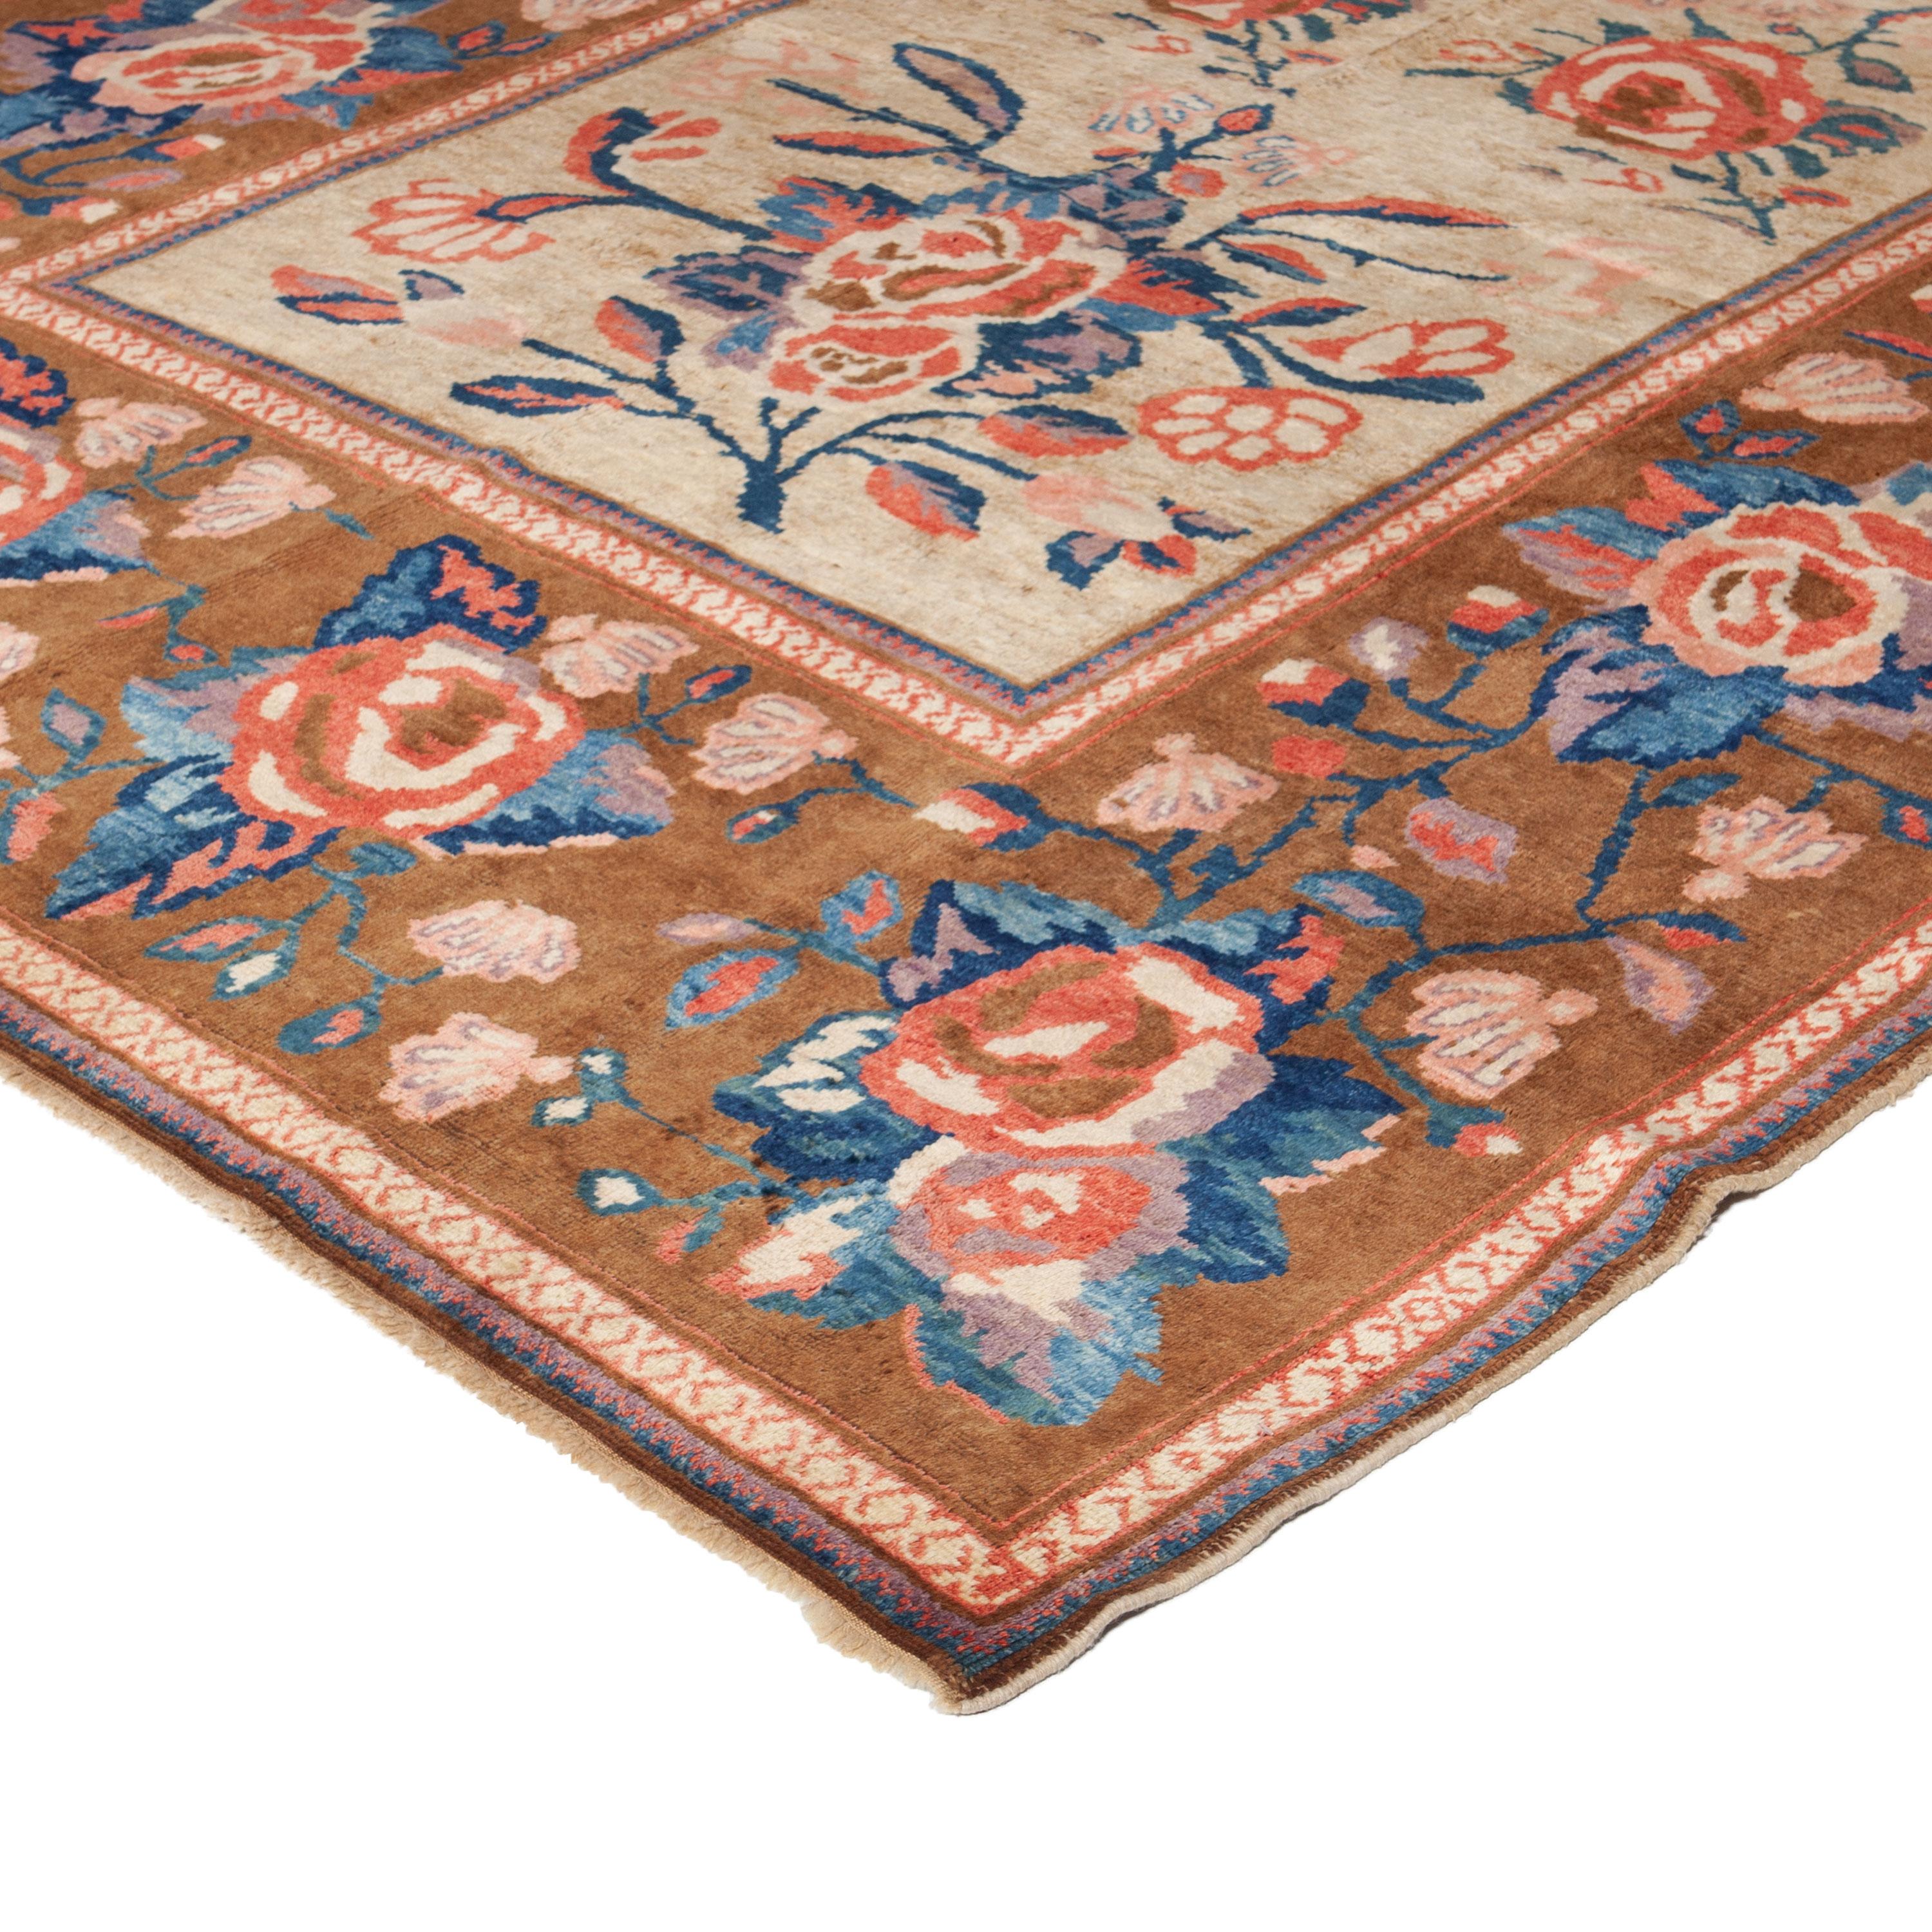 Persian abc carpet Vintage Traditional Karabagh Rug - 8' x 11'9